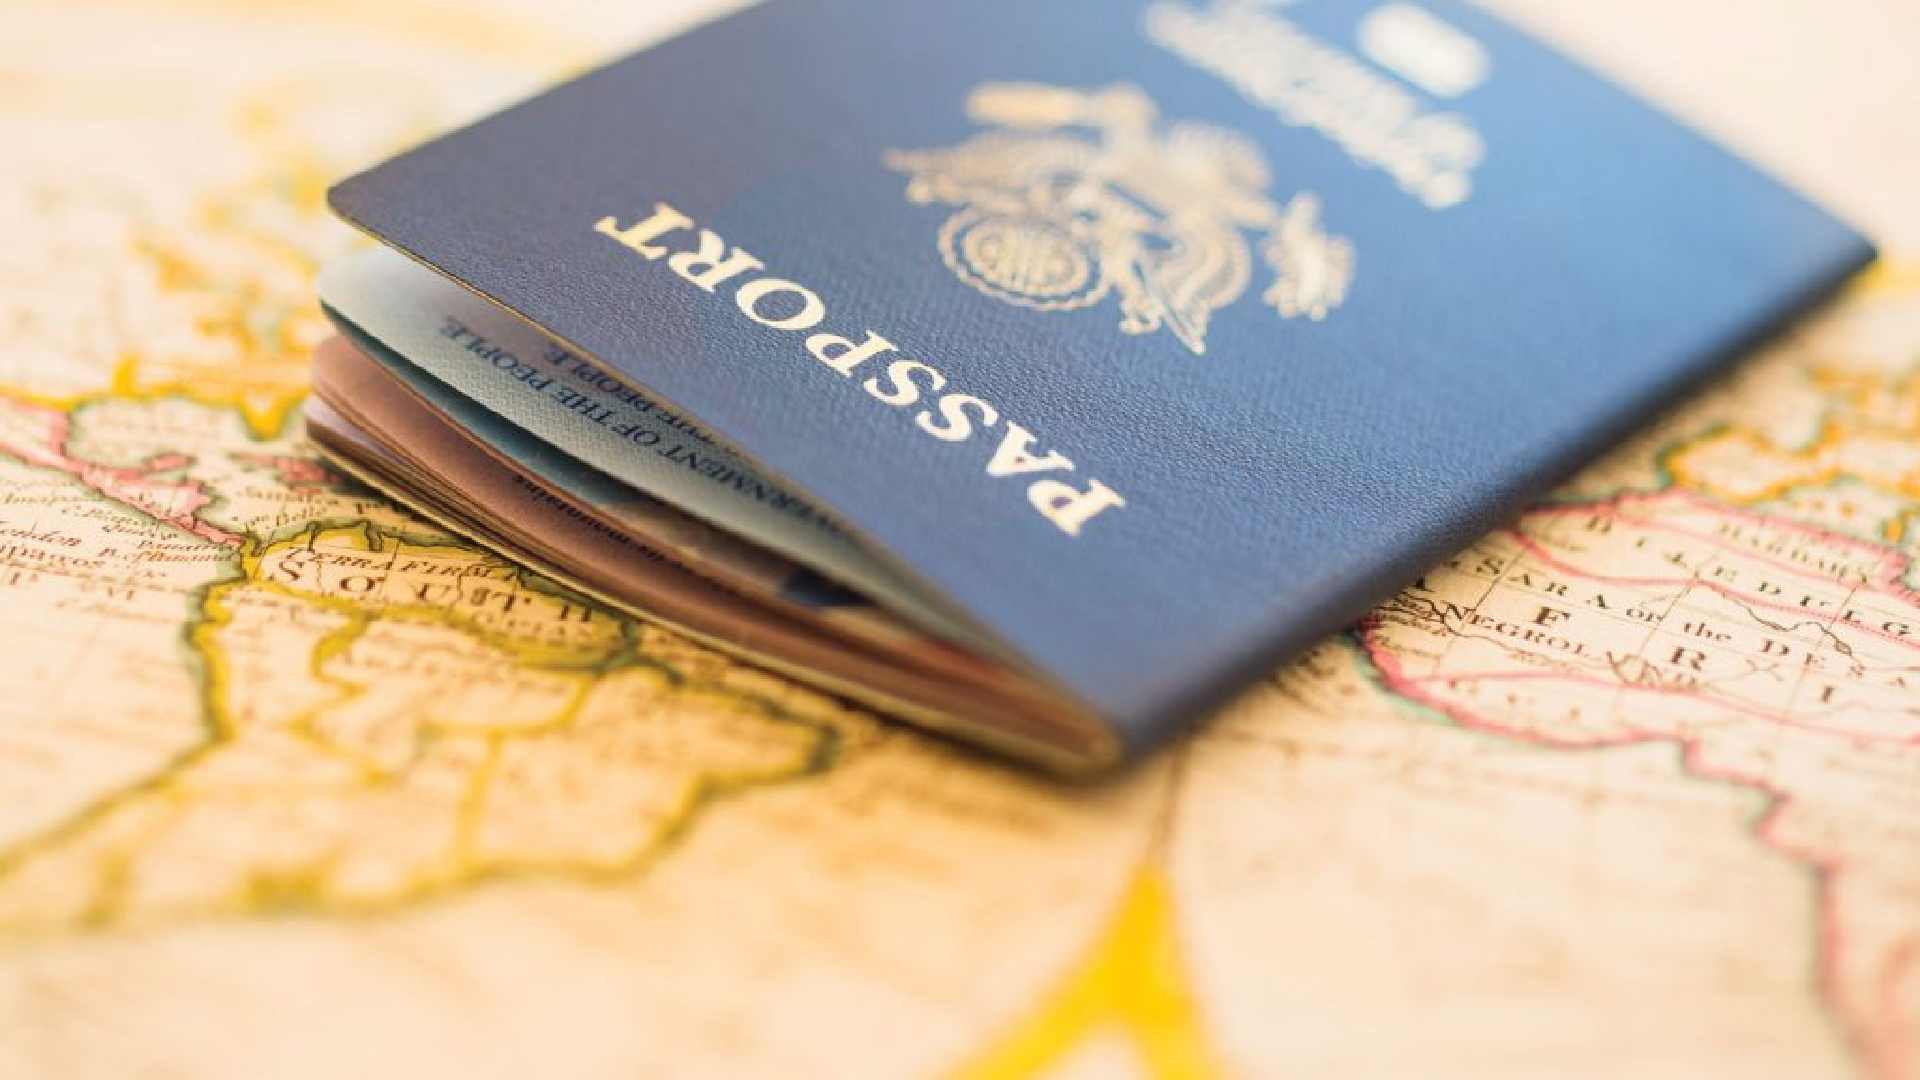 UAE 3 months visit visa price